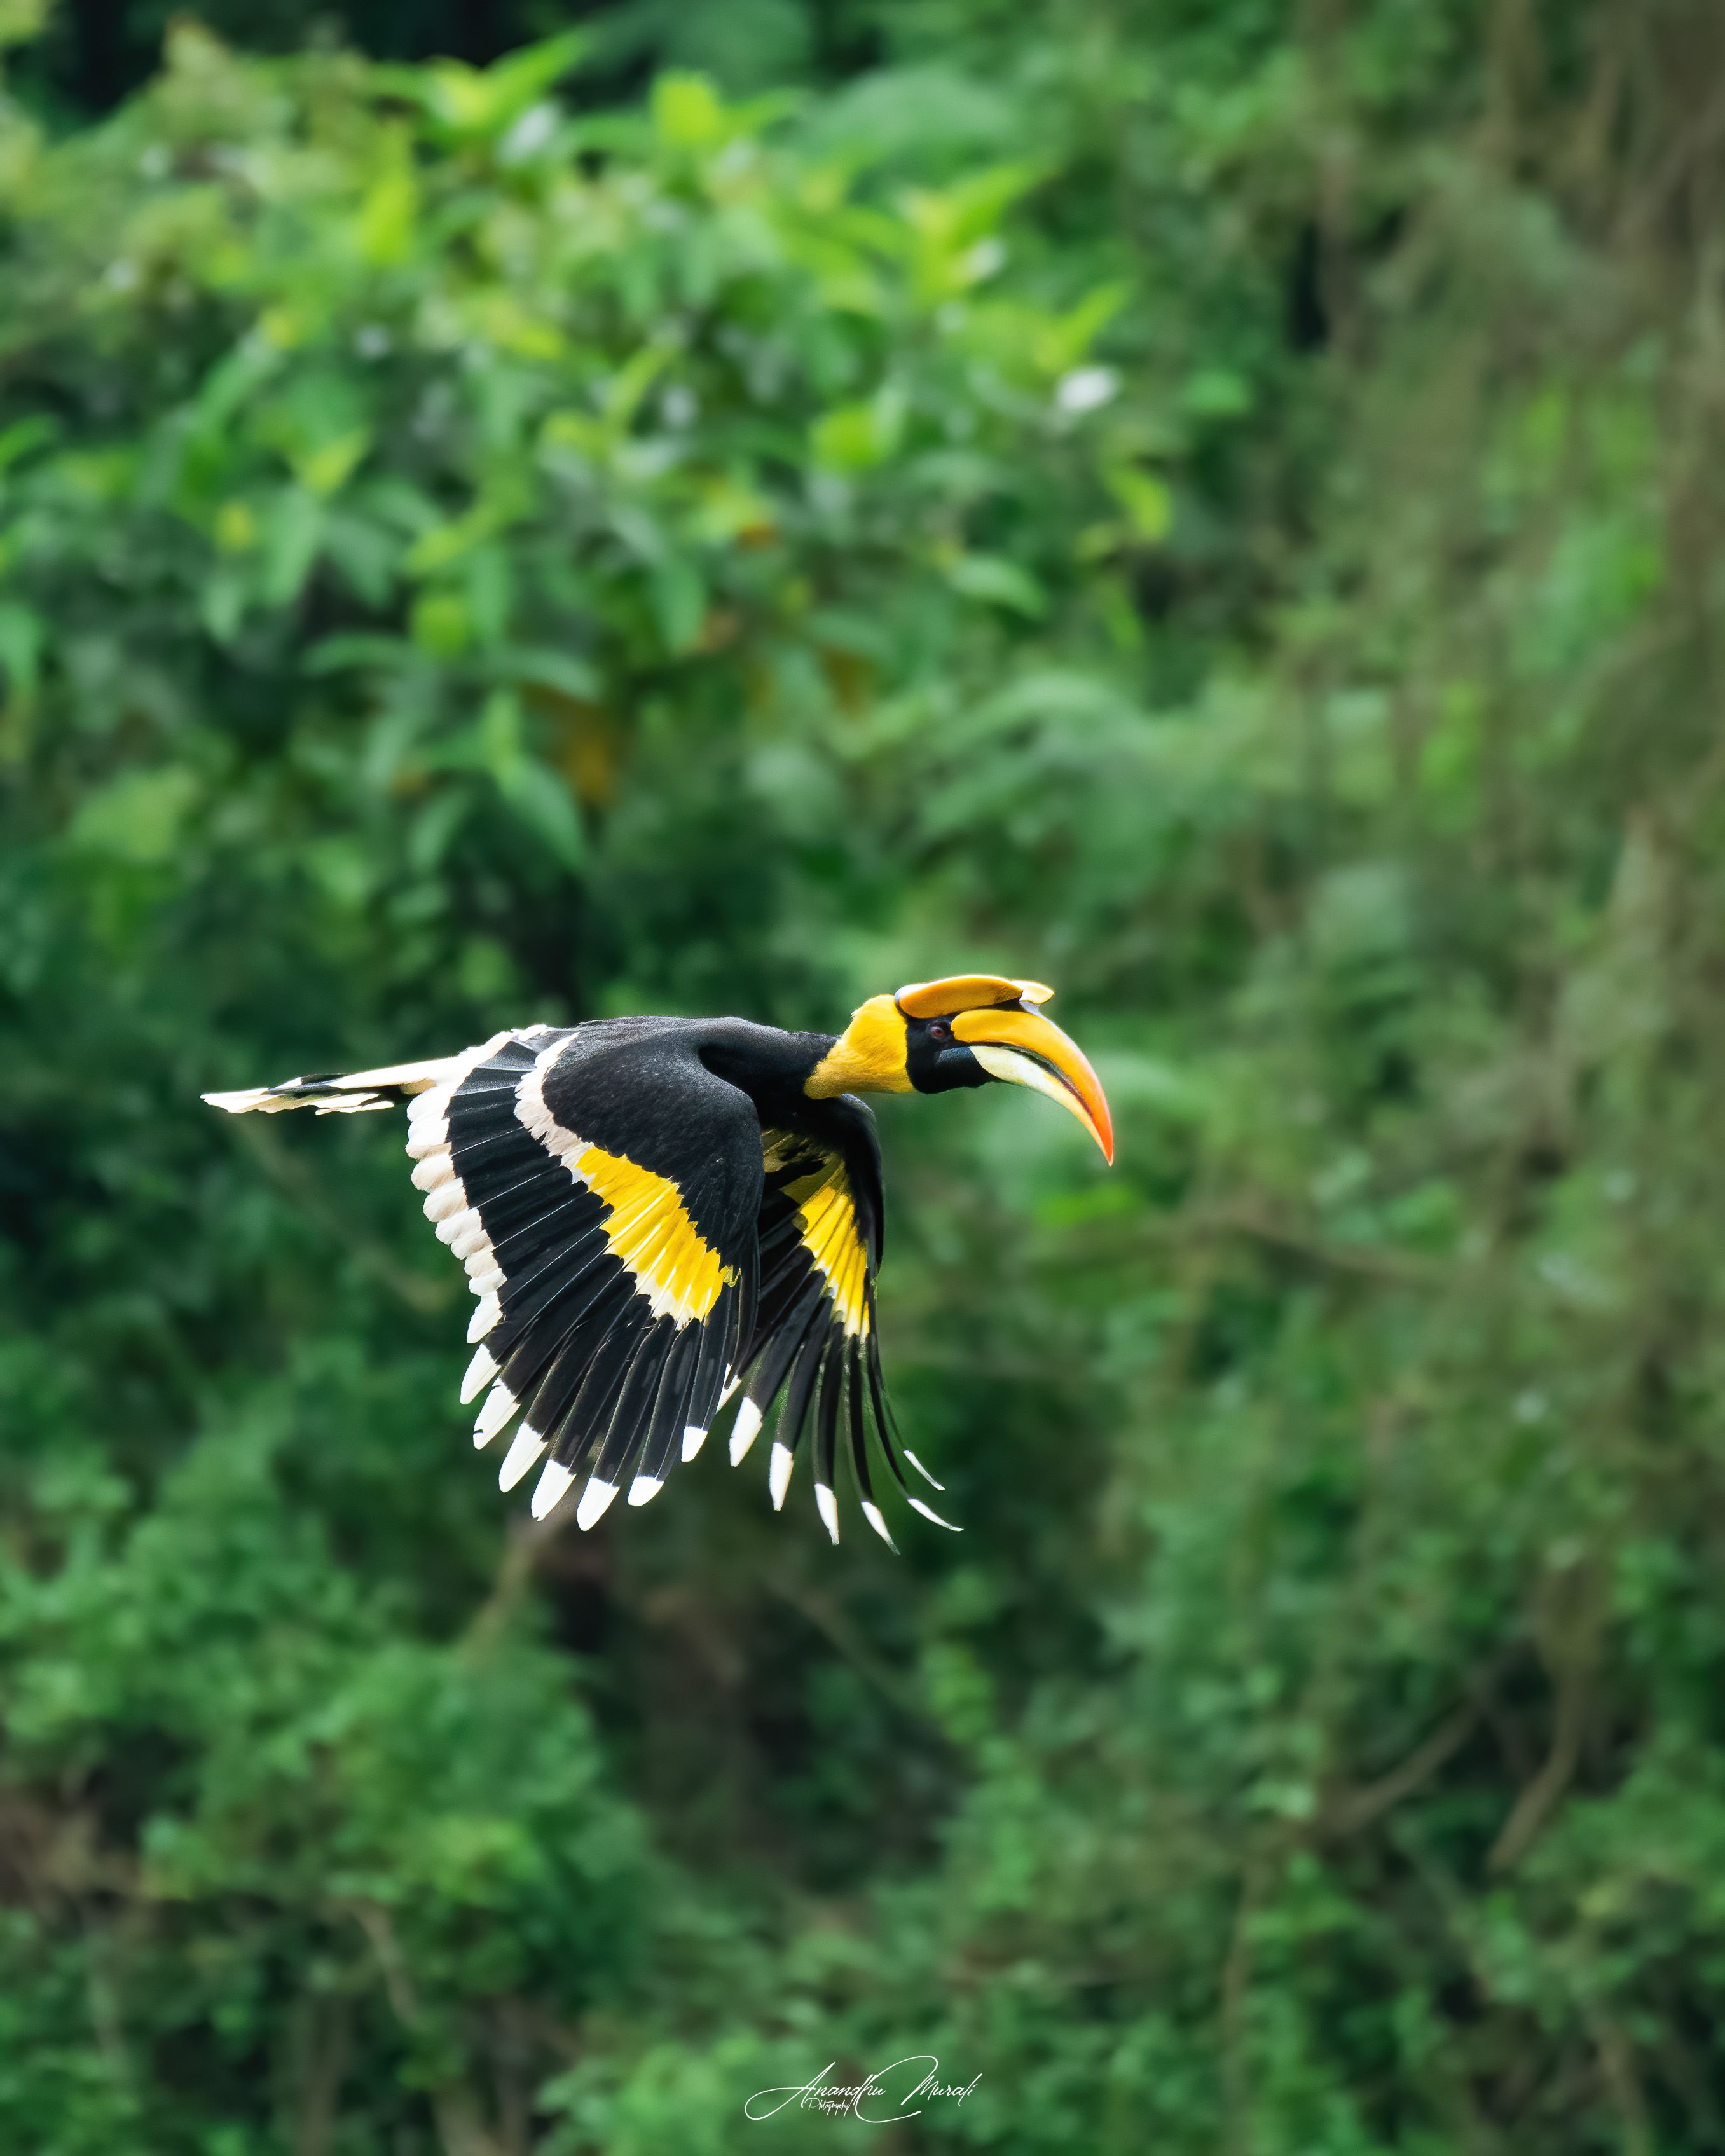 Birds hornbill kerala india birdphotography wildlife, Anandhu M